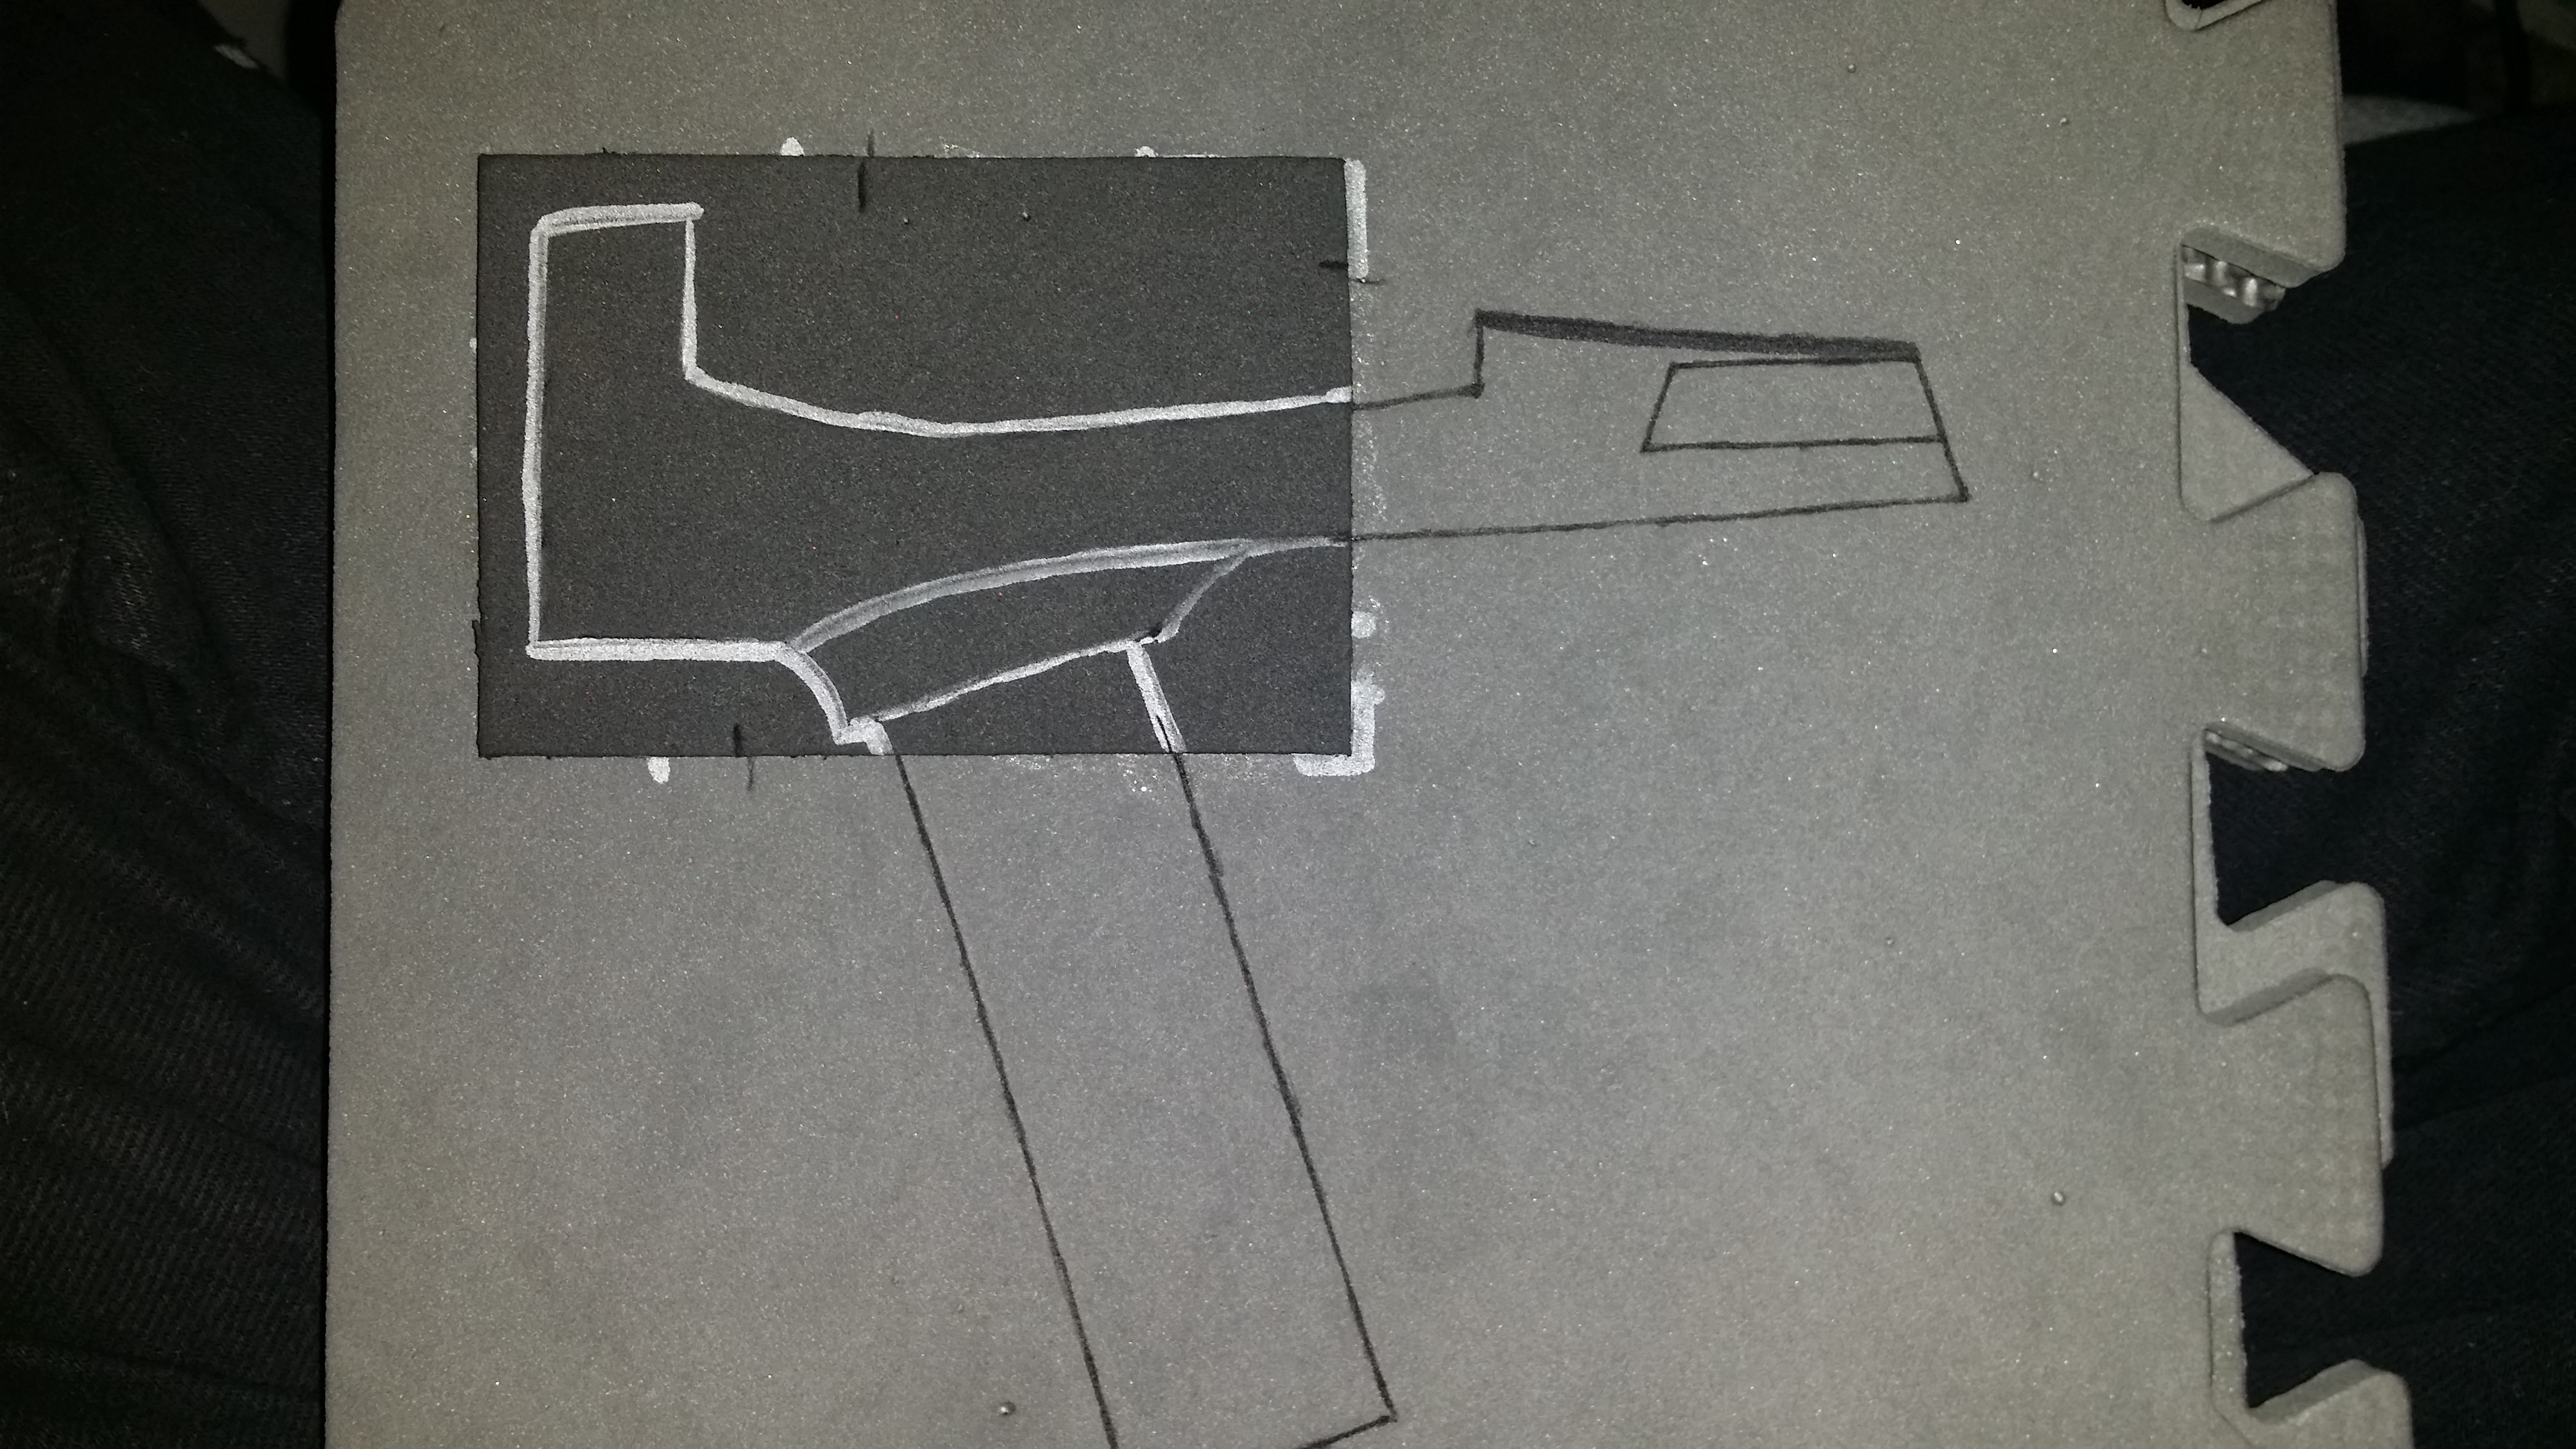 Phaser II (4) Started with EVA floor mats